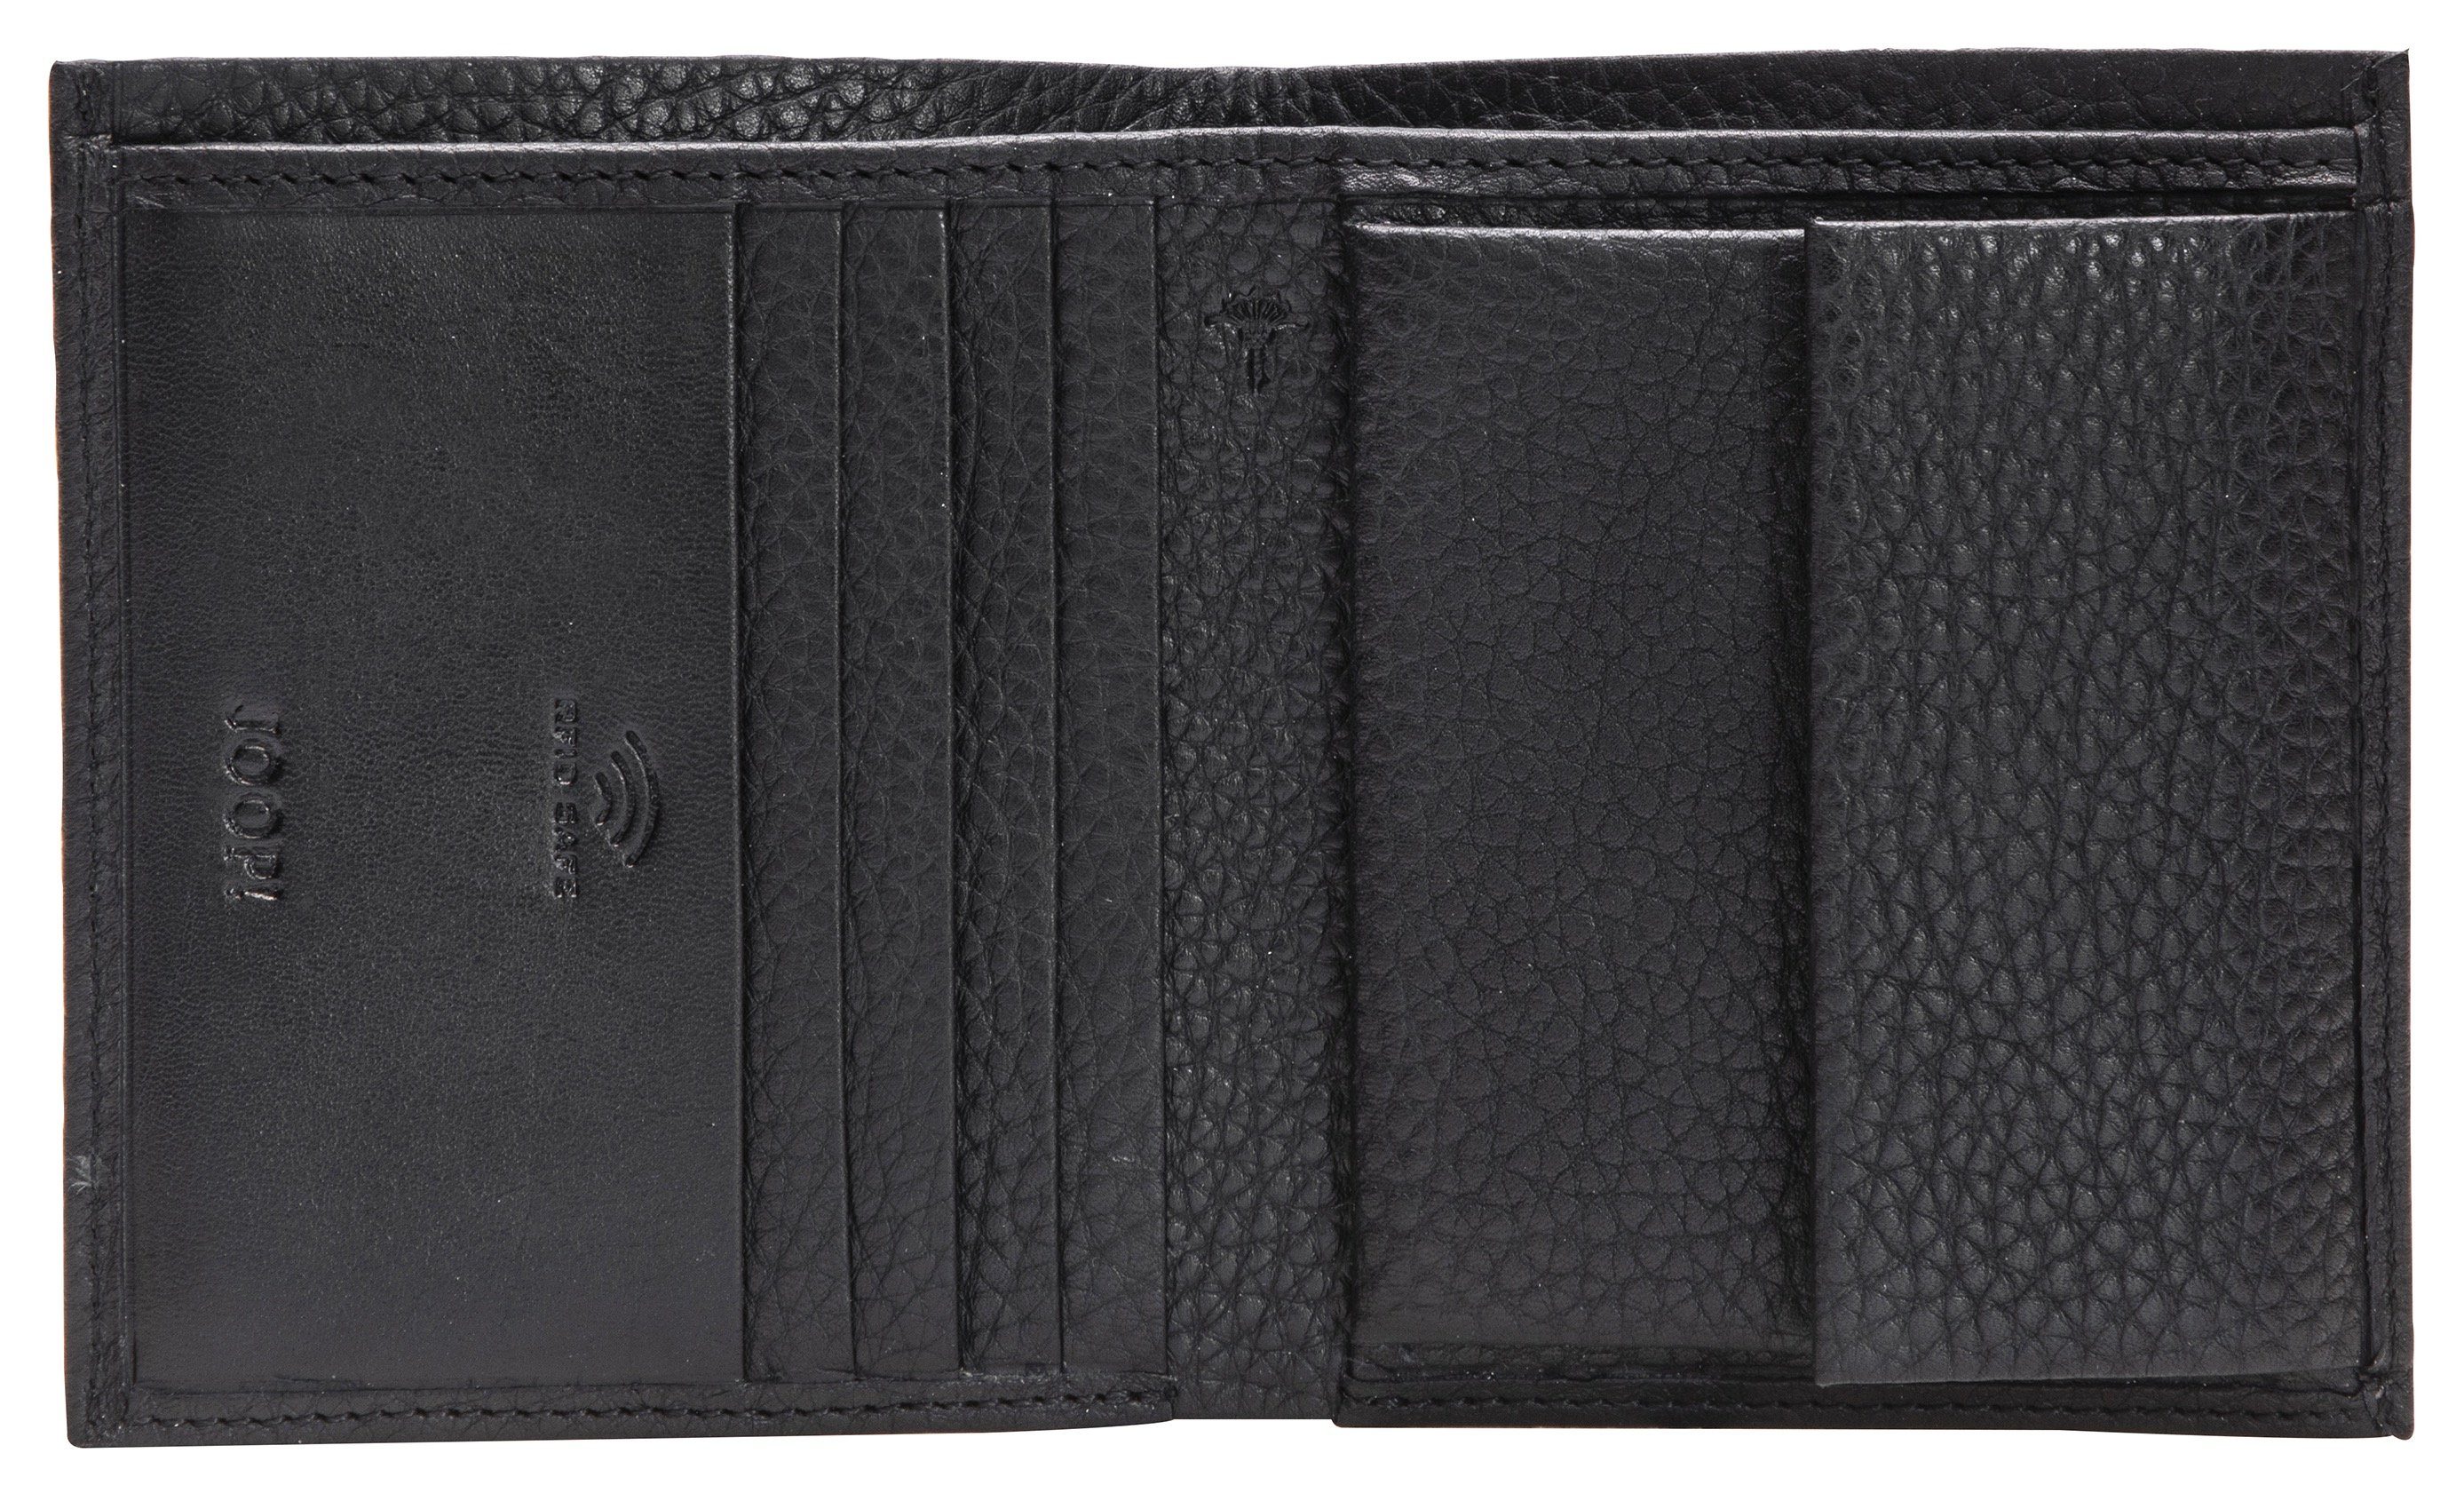 Joop! Geldbörse cardona daphnis mit Metall Beschlägen billfold Black v6, anthrazitfarbenem aus